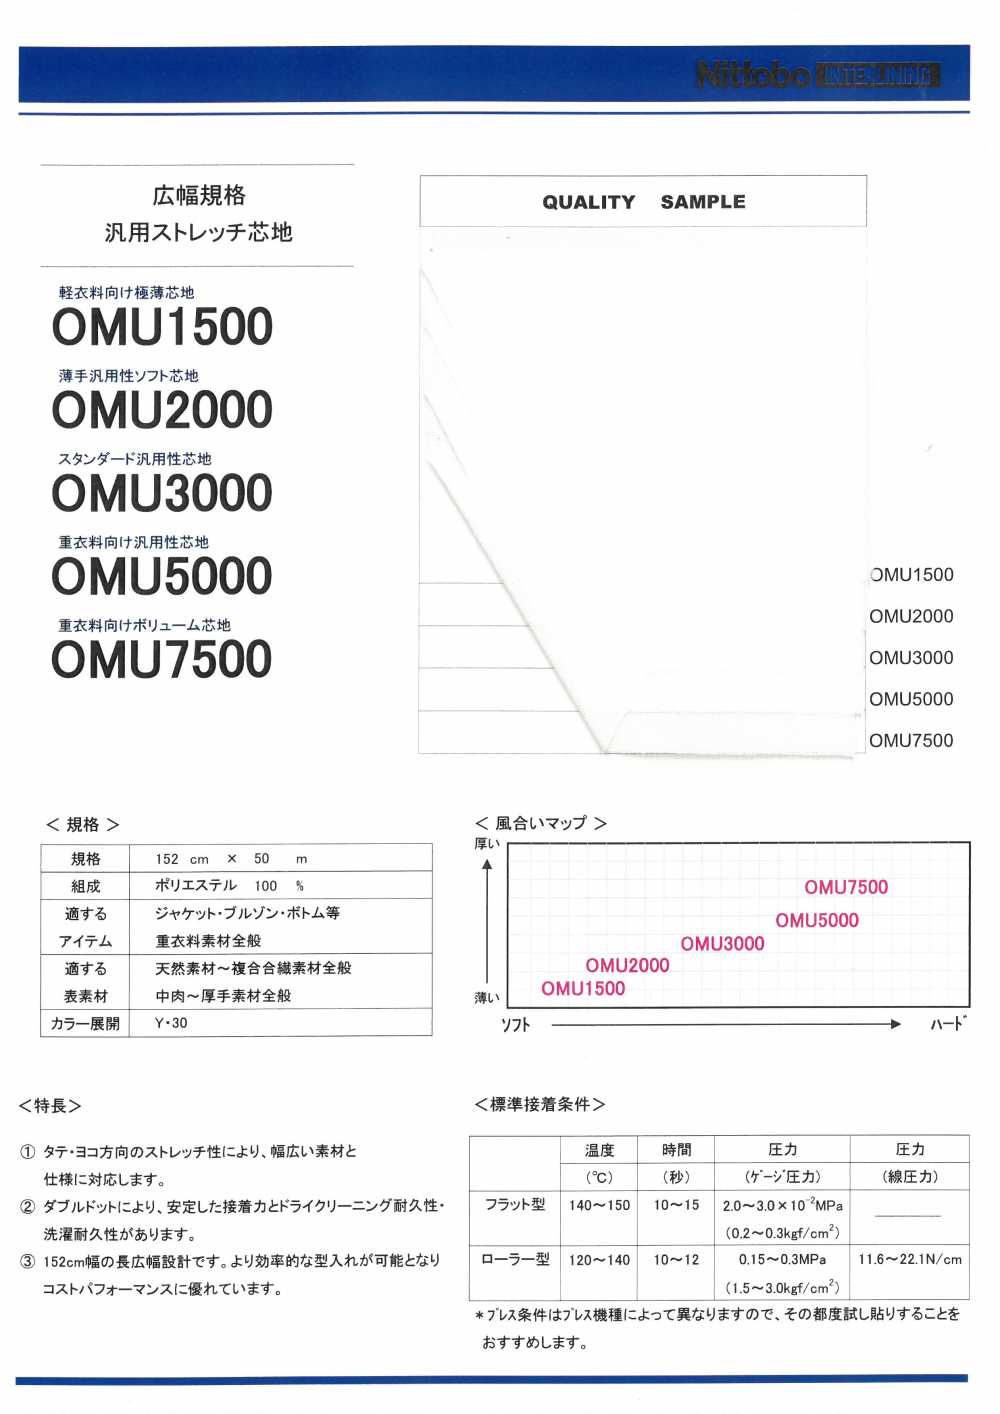 OMU3000 Standard Versatile Interlining Nittobo